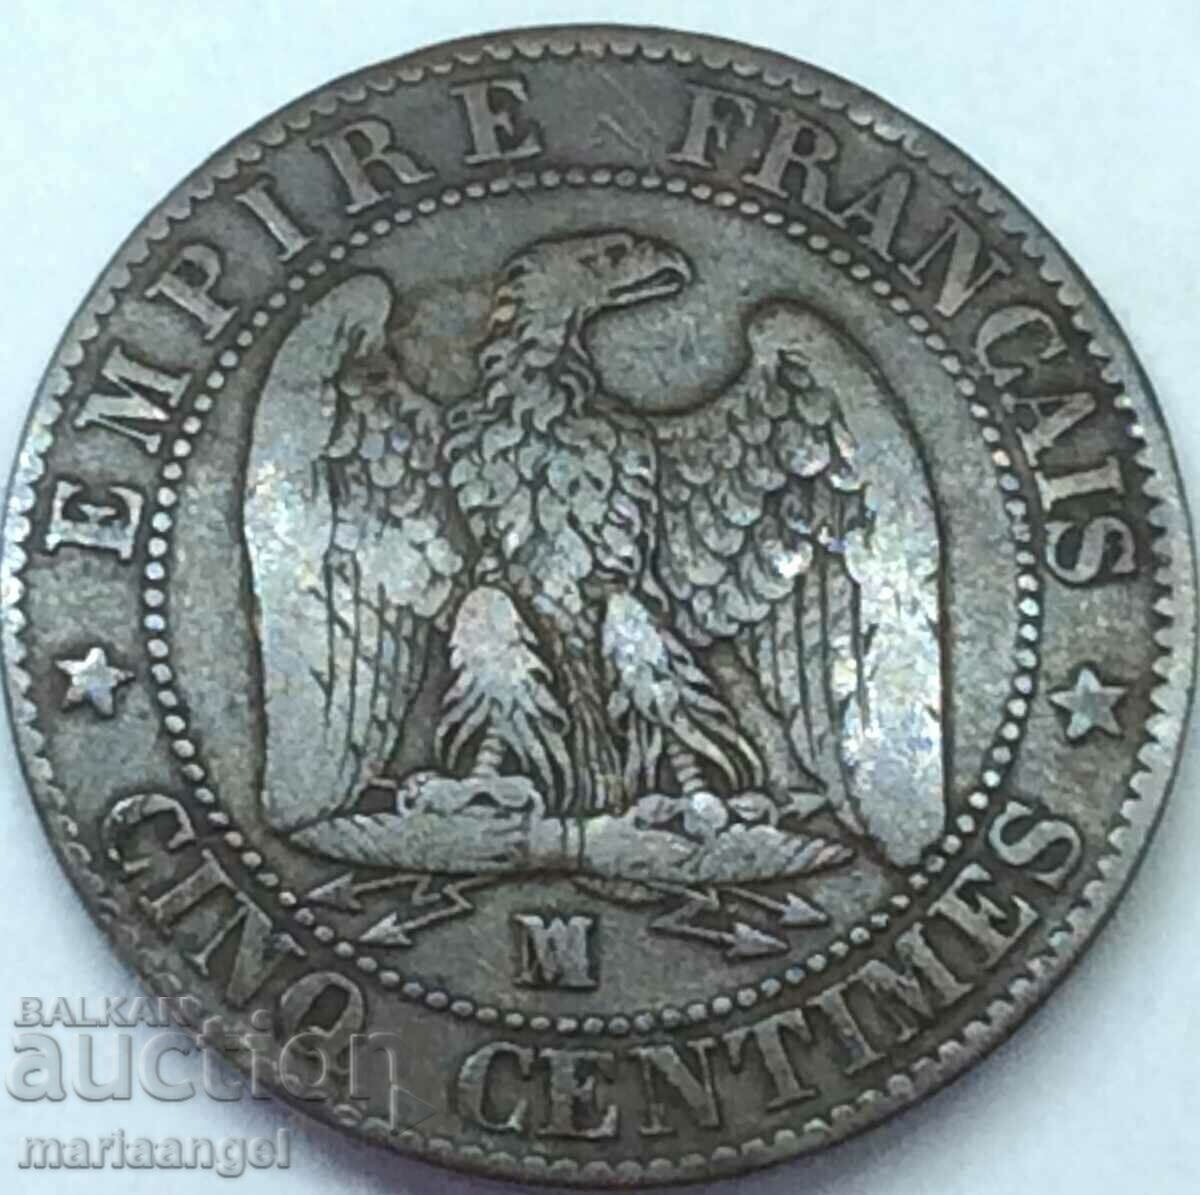 France 5 centimes 1854 M - Marcel Napoleon III bronze